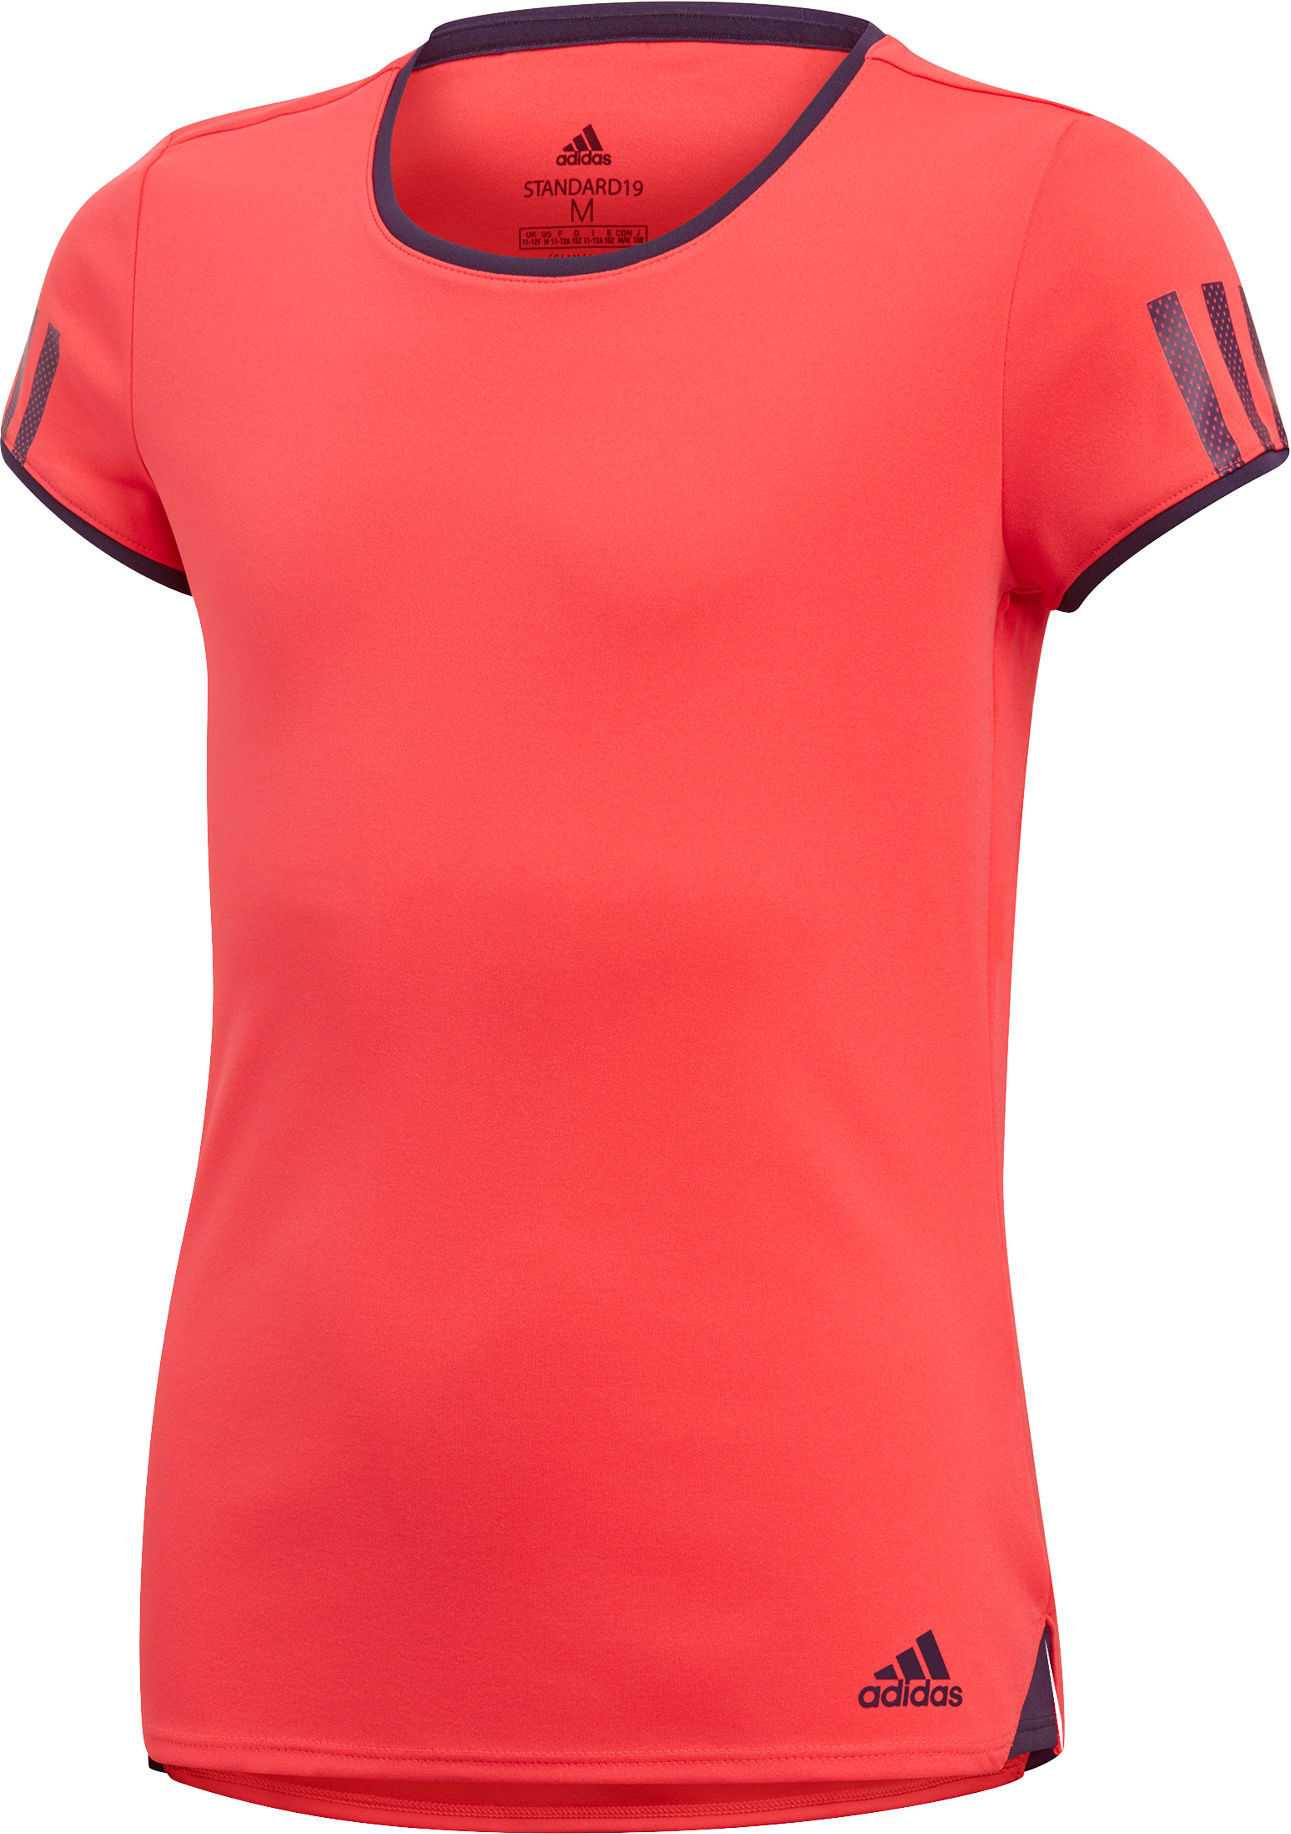 Adidas Girls Club T-shirt Träningströja Coral 140